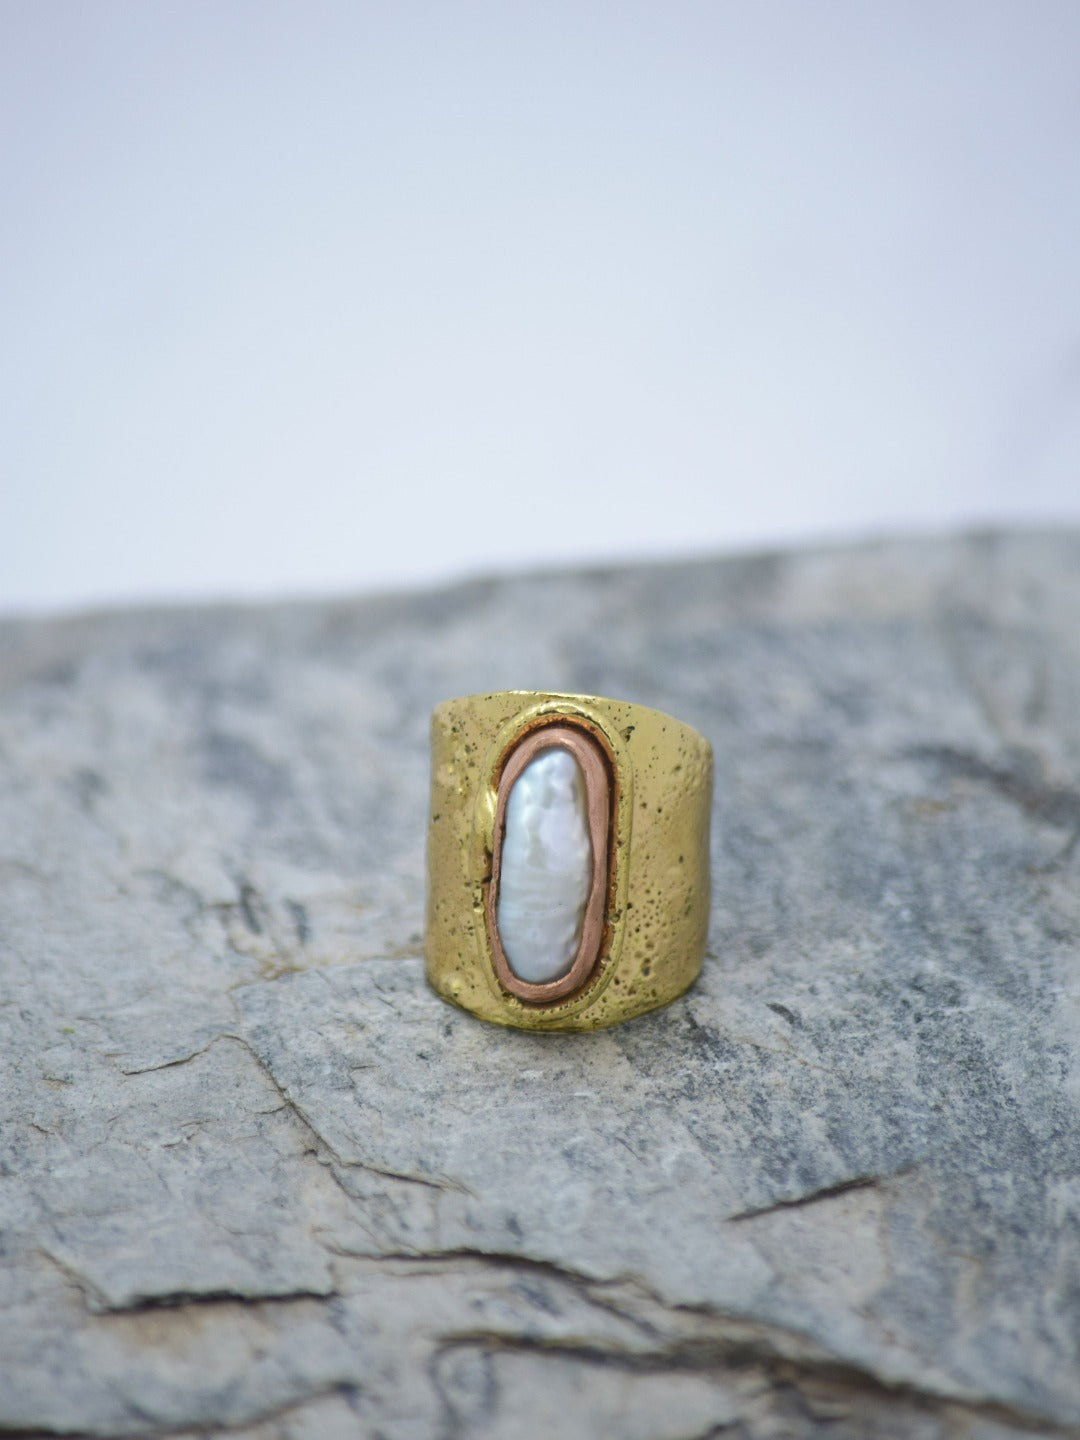  Drop Look Alike Gold Plated Baroque Pearl Semi Precious Stone Adjustable Ring  